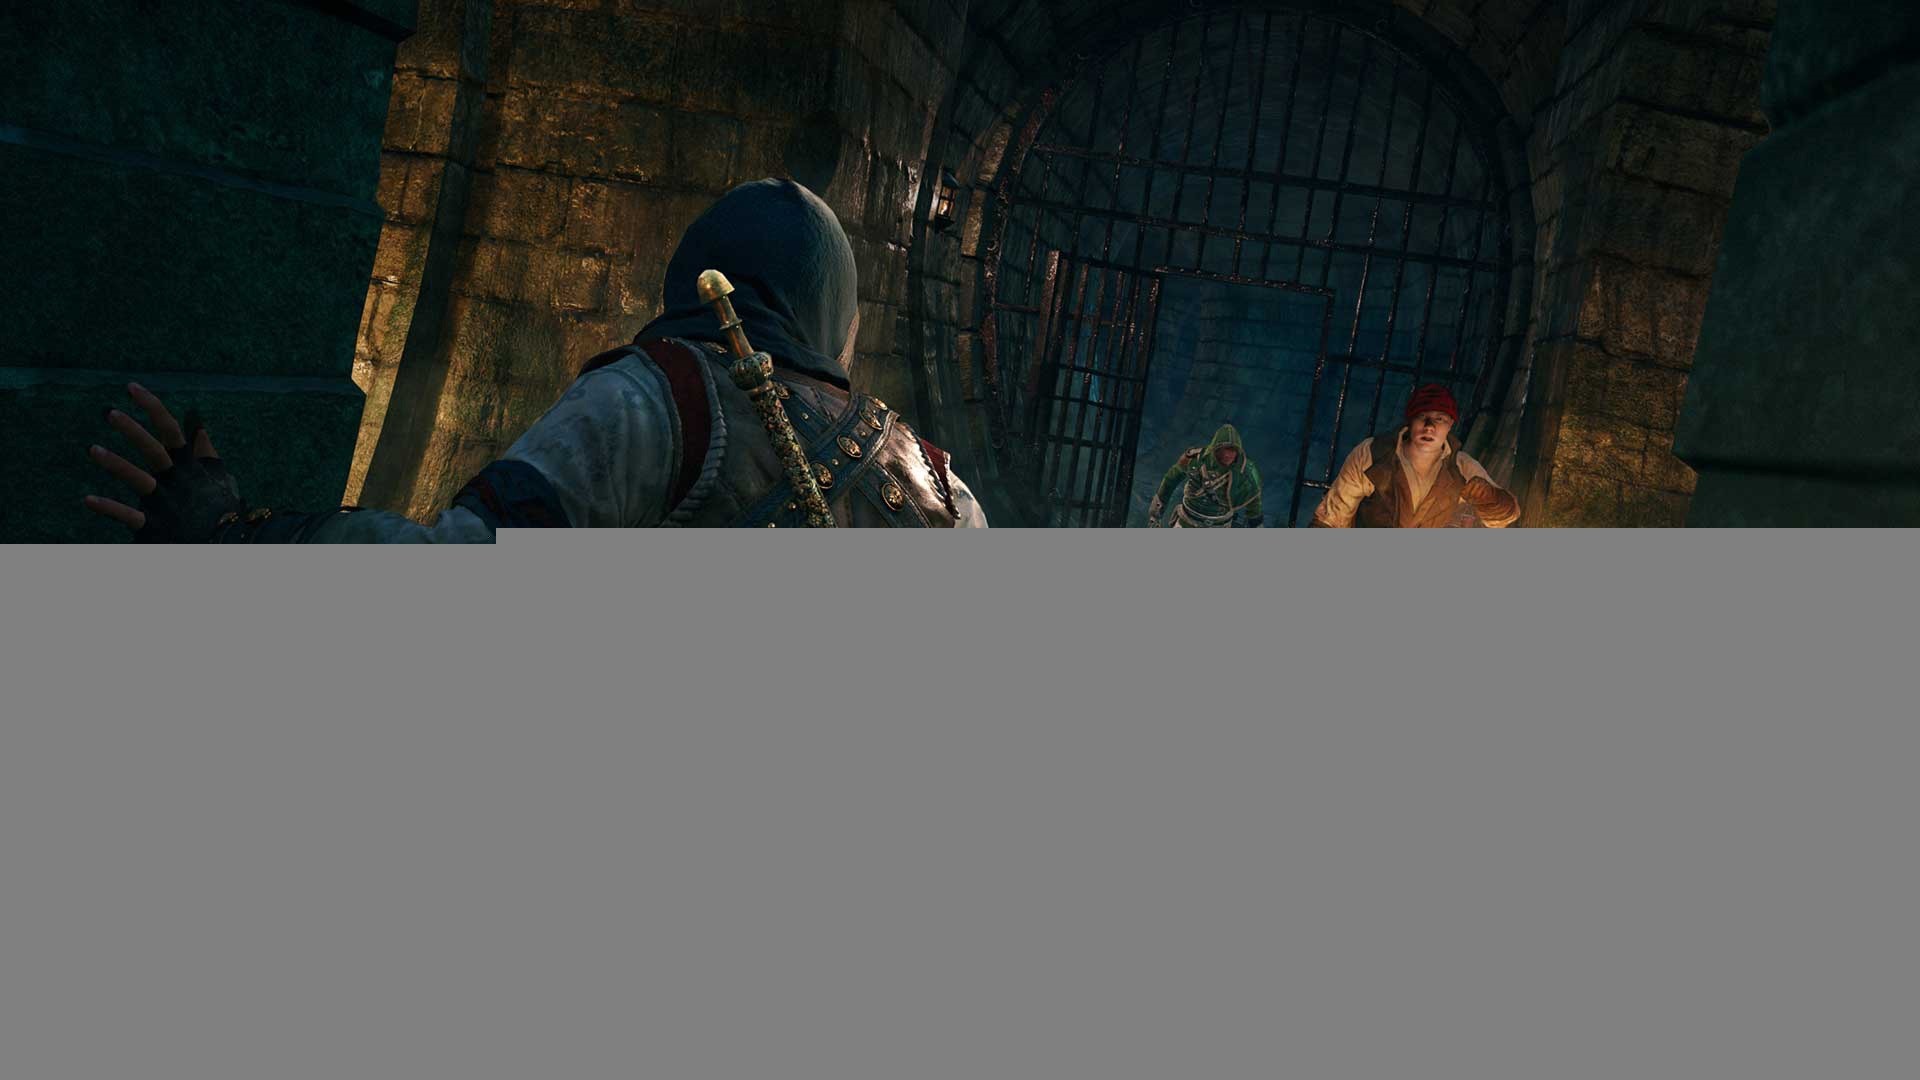 1920x1080 Assassin's Creed Unity - Explore the Catacombs Screenshots